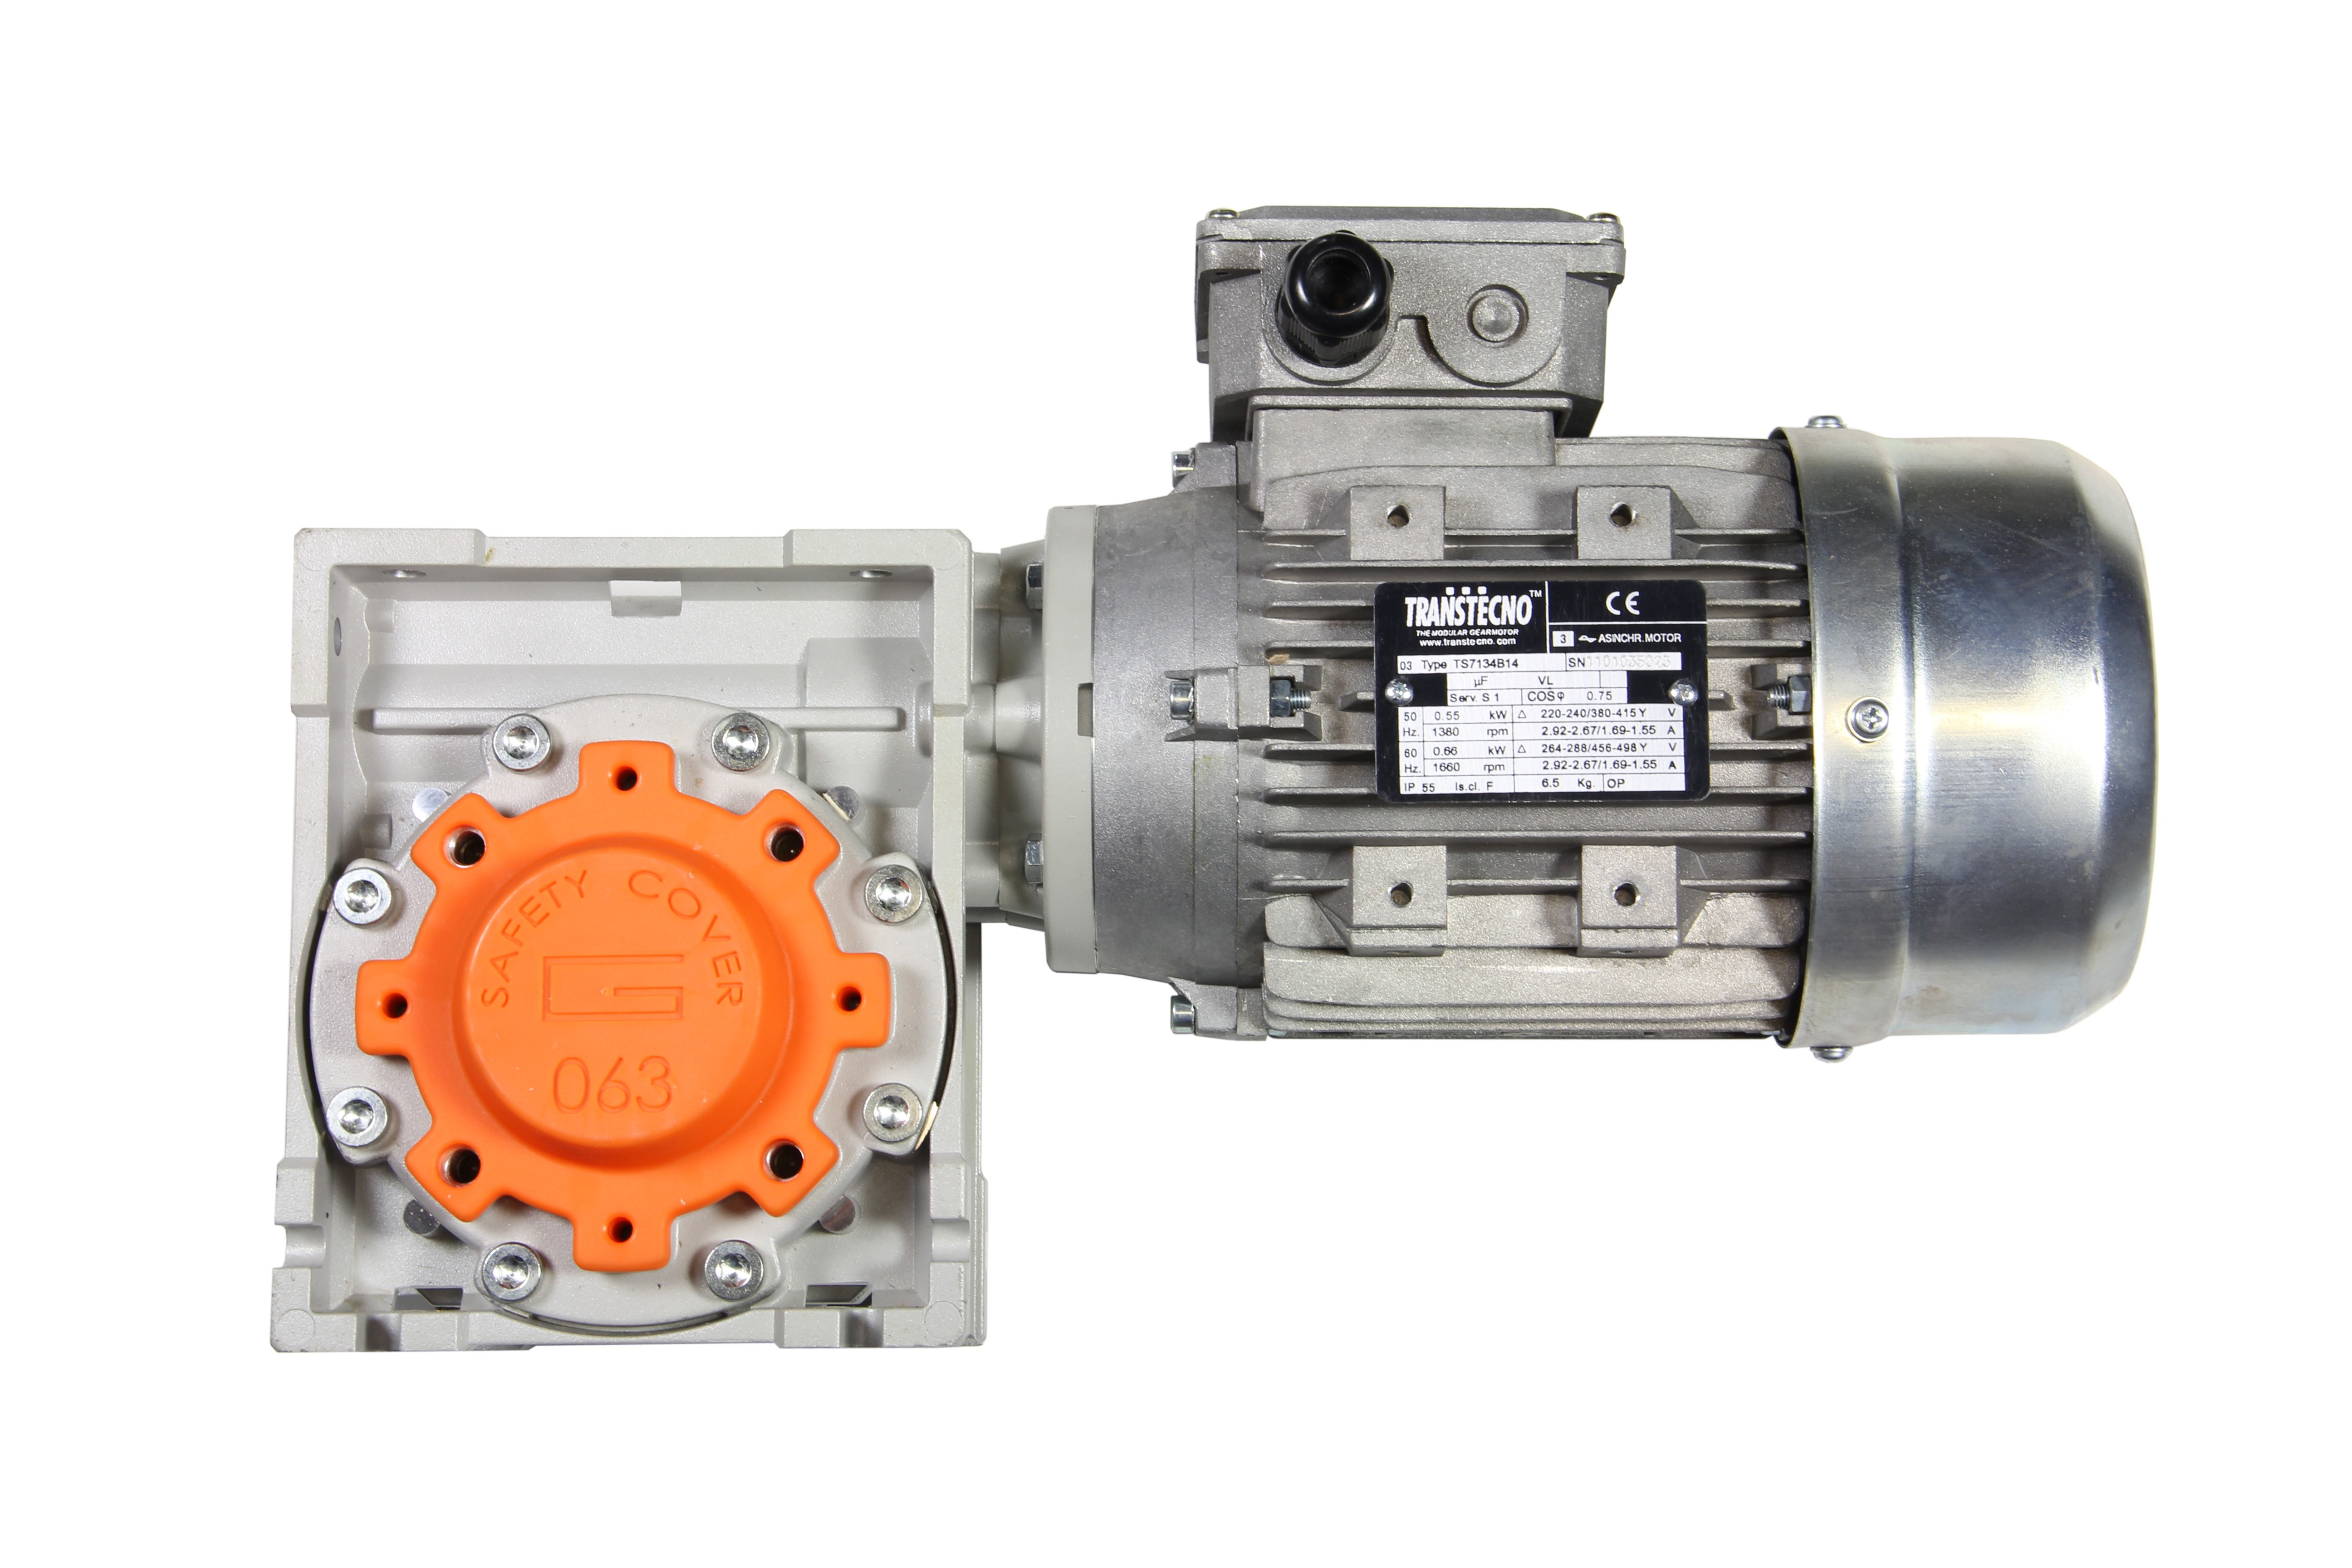 Tuhkaruuvin vaihdemoottori, Transtecno NMRV063-60-071B14, 0,55 kW